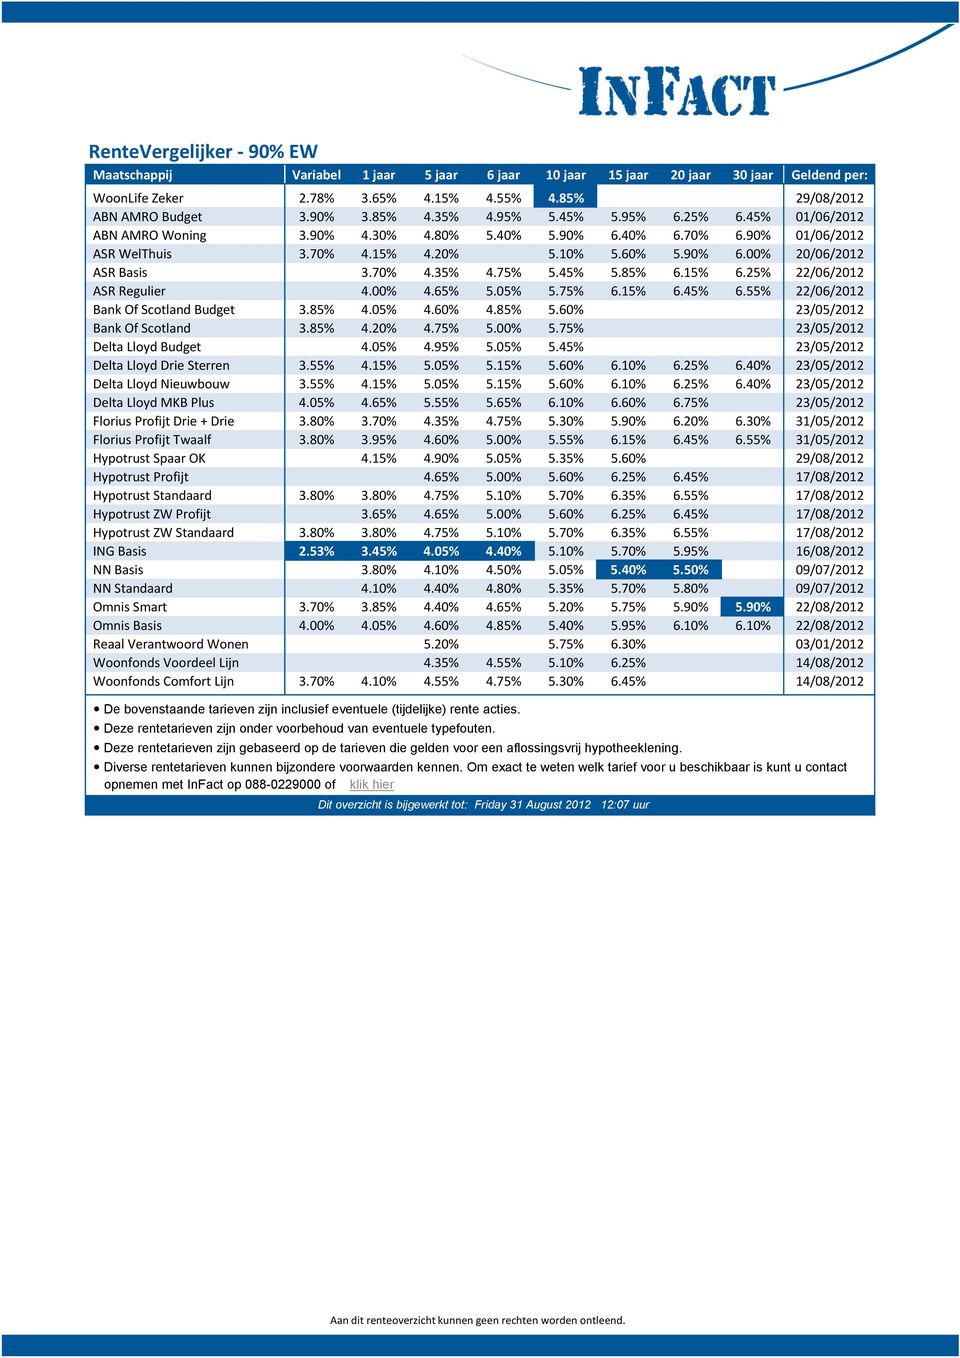 75% 6.15% 6.45% 6.55% 22/06/2012 Bank Of Scotland Budget 3.85% 4.05% 4.60% 4.85% 5.60% 23/05/2012 Bank Of Scotland 3.85% 4.20% 4.75% 5.00% 5.75% 23/05/2012 Delta Lloyd Budget 4.05% 4.95% 5.05% 5.